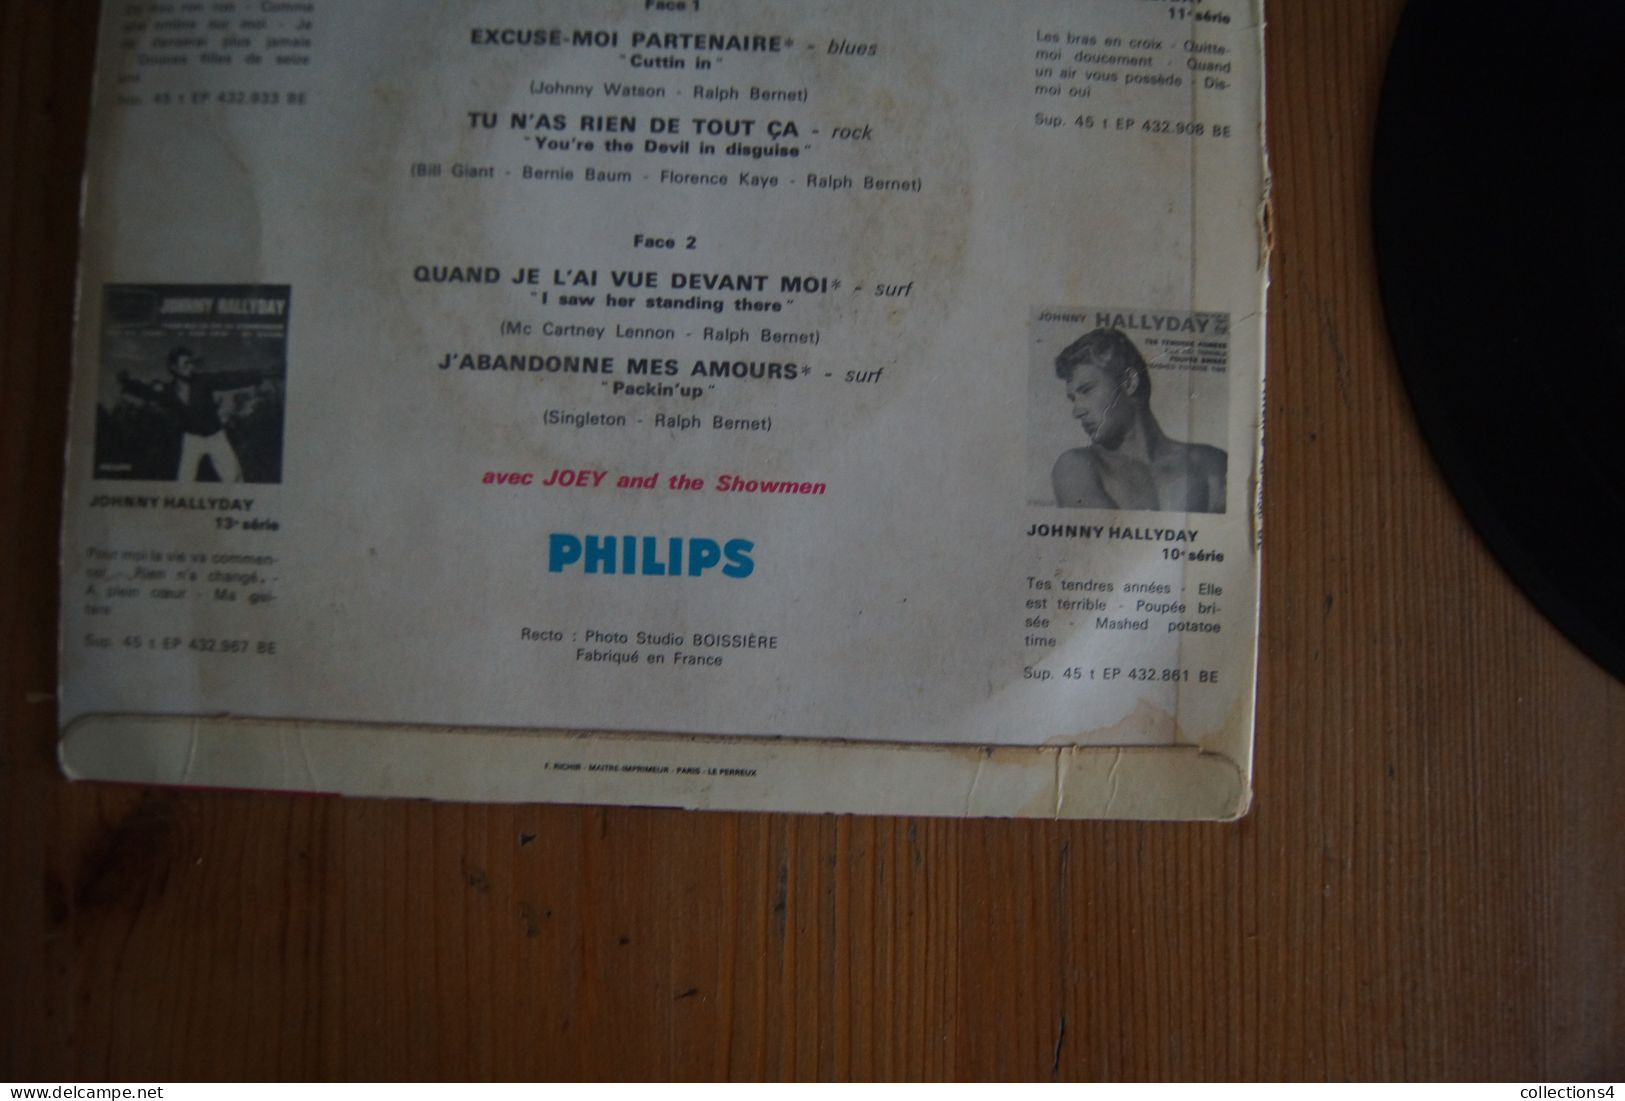 JOHNNY HALLYDAY EXCUSE MOI PARTENAIRE EP 1965 VARIANTE  BEATLES - 45 Rpm - Maxi-Singles